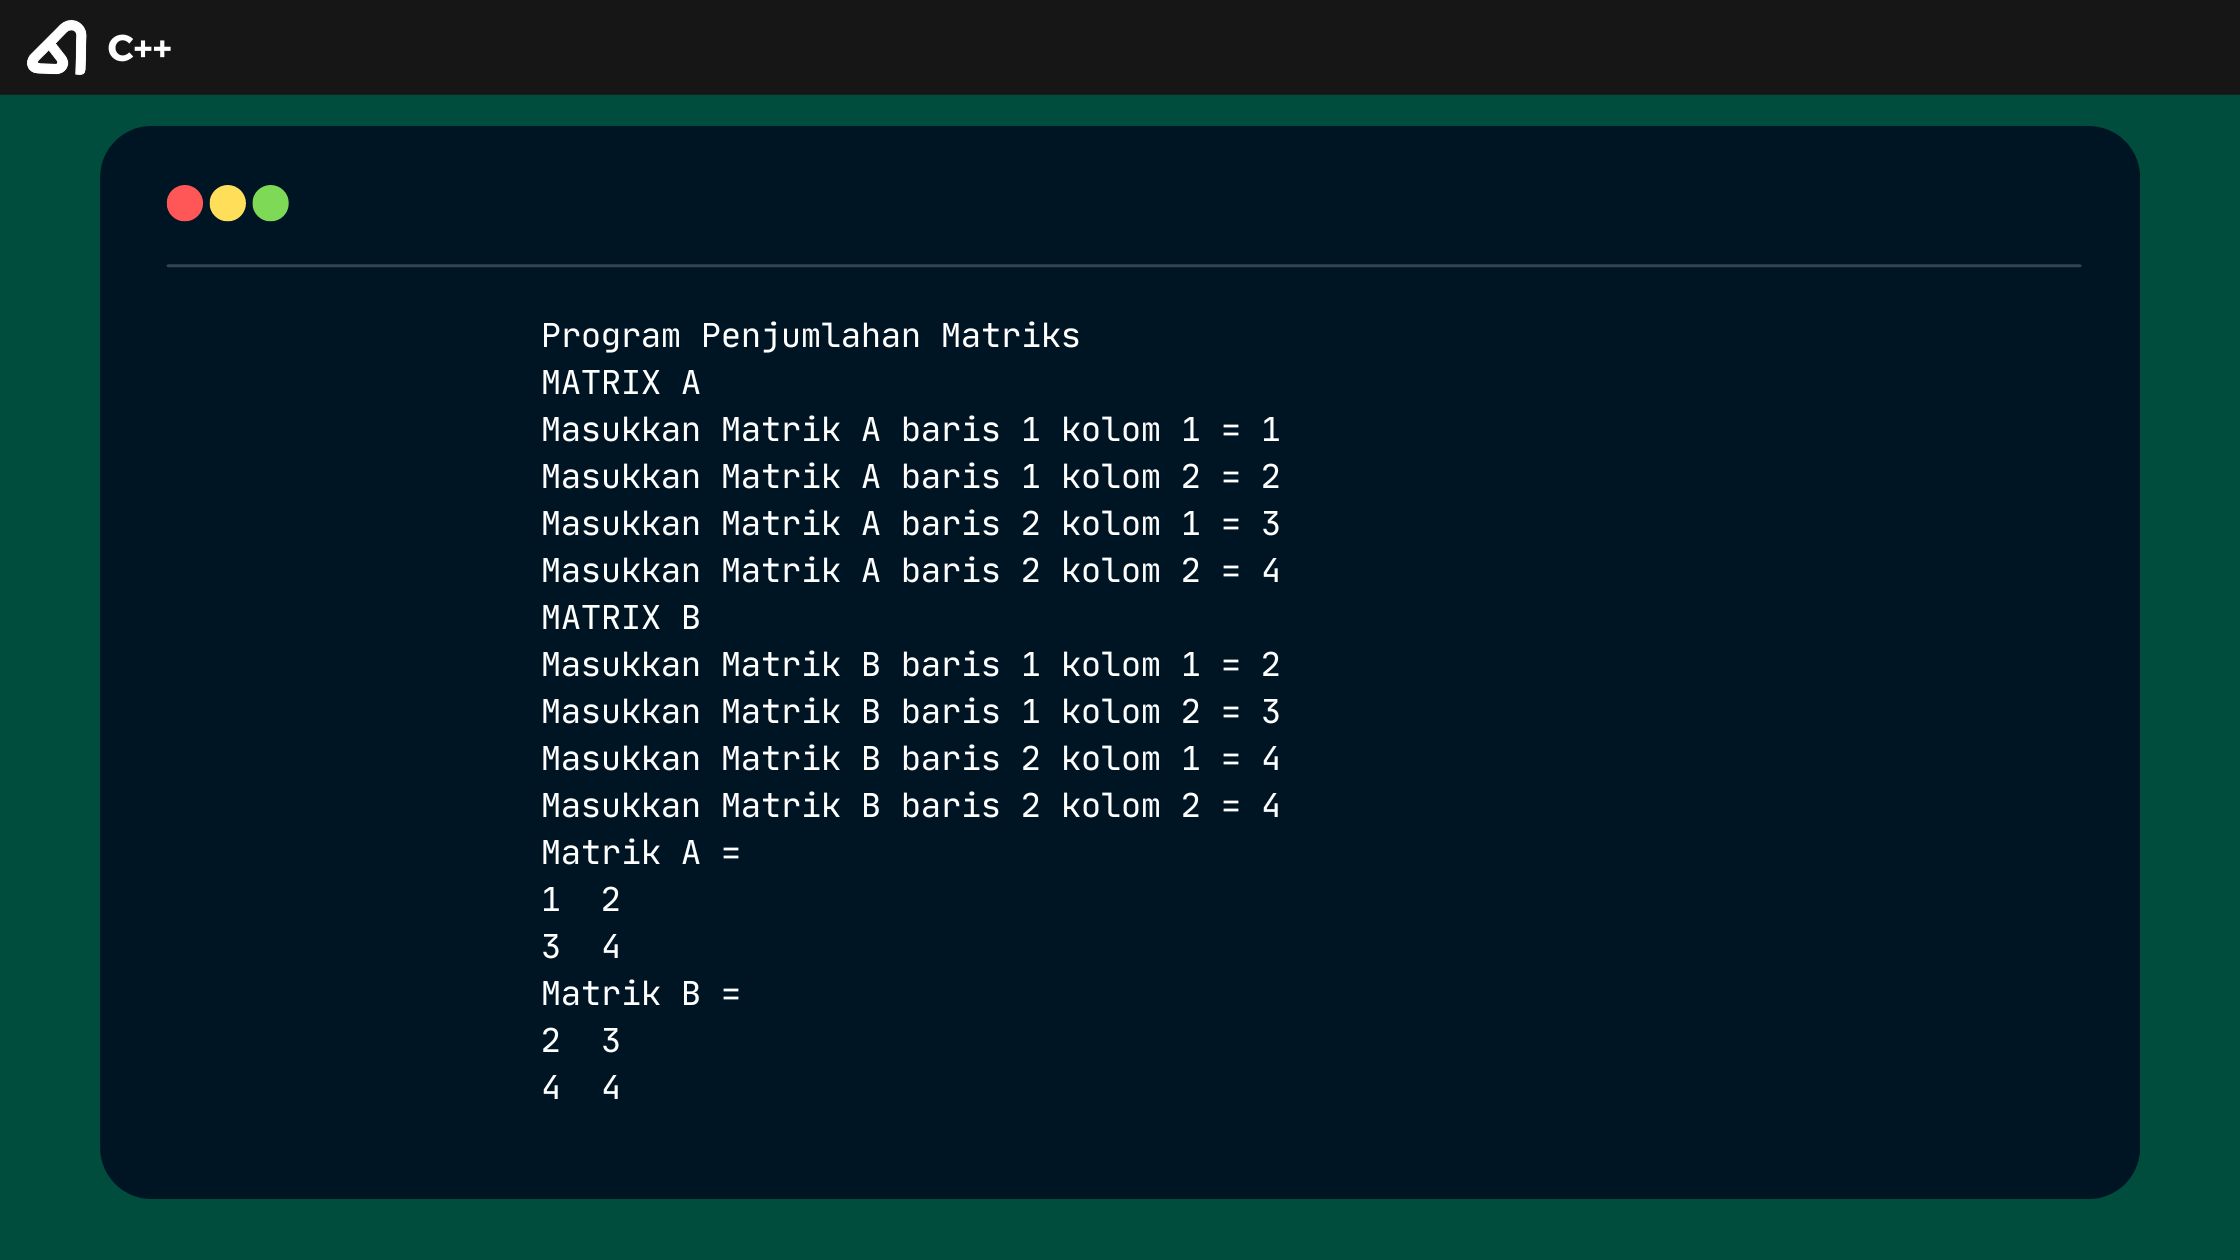 Program Penjumlahan Matriks 2x2 C++